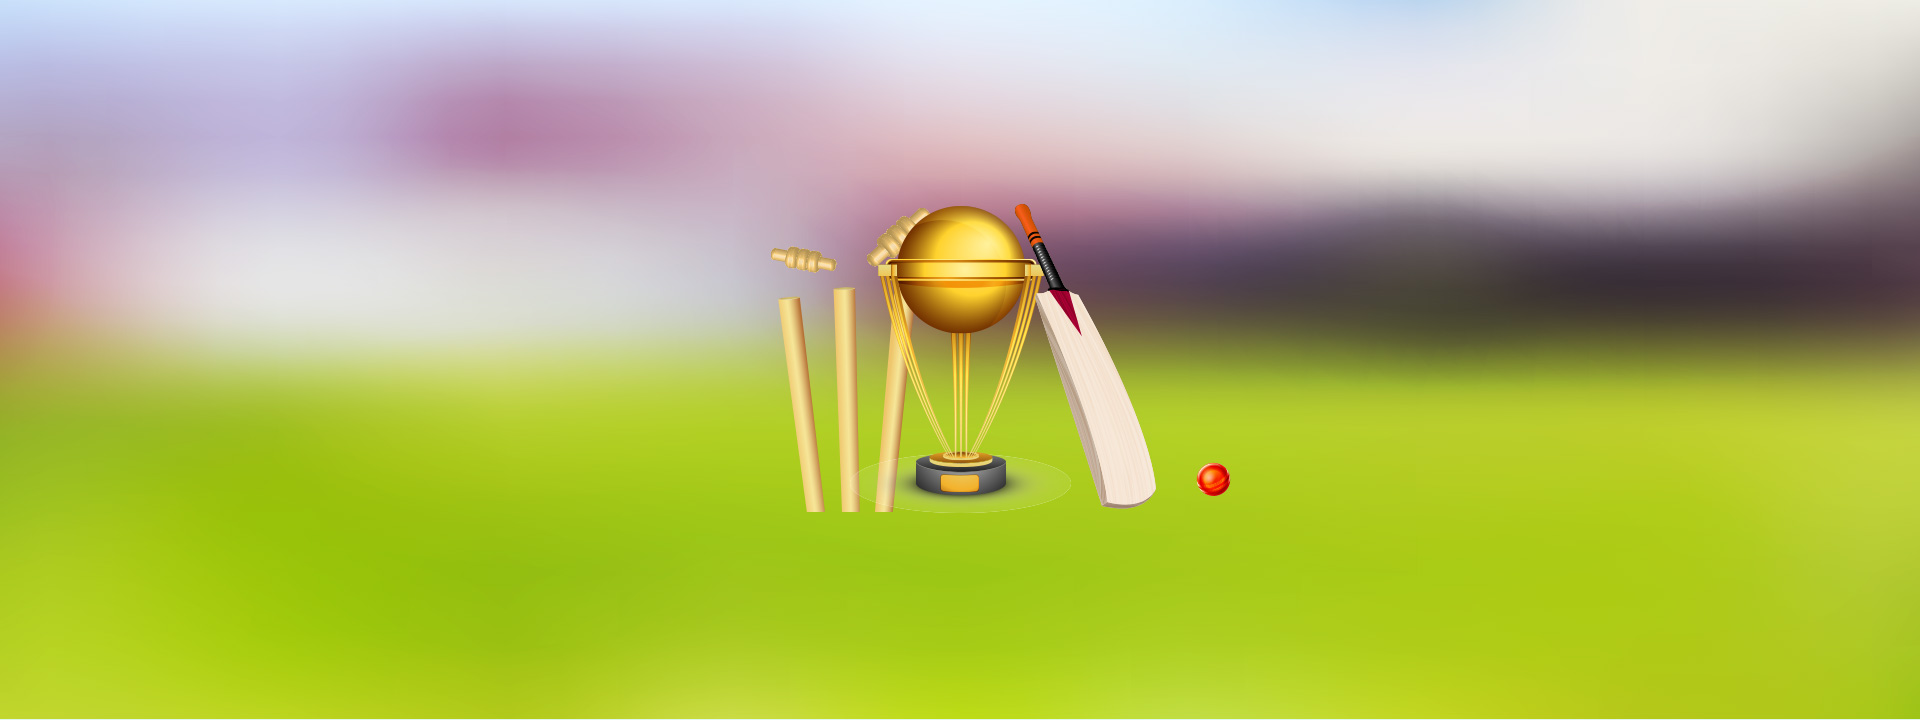 Cricket market load app software